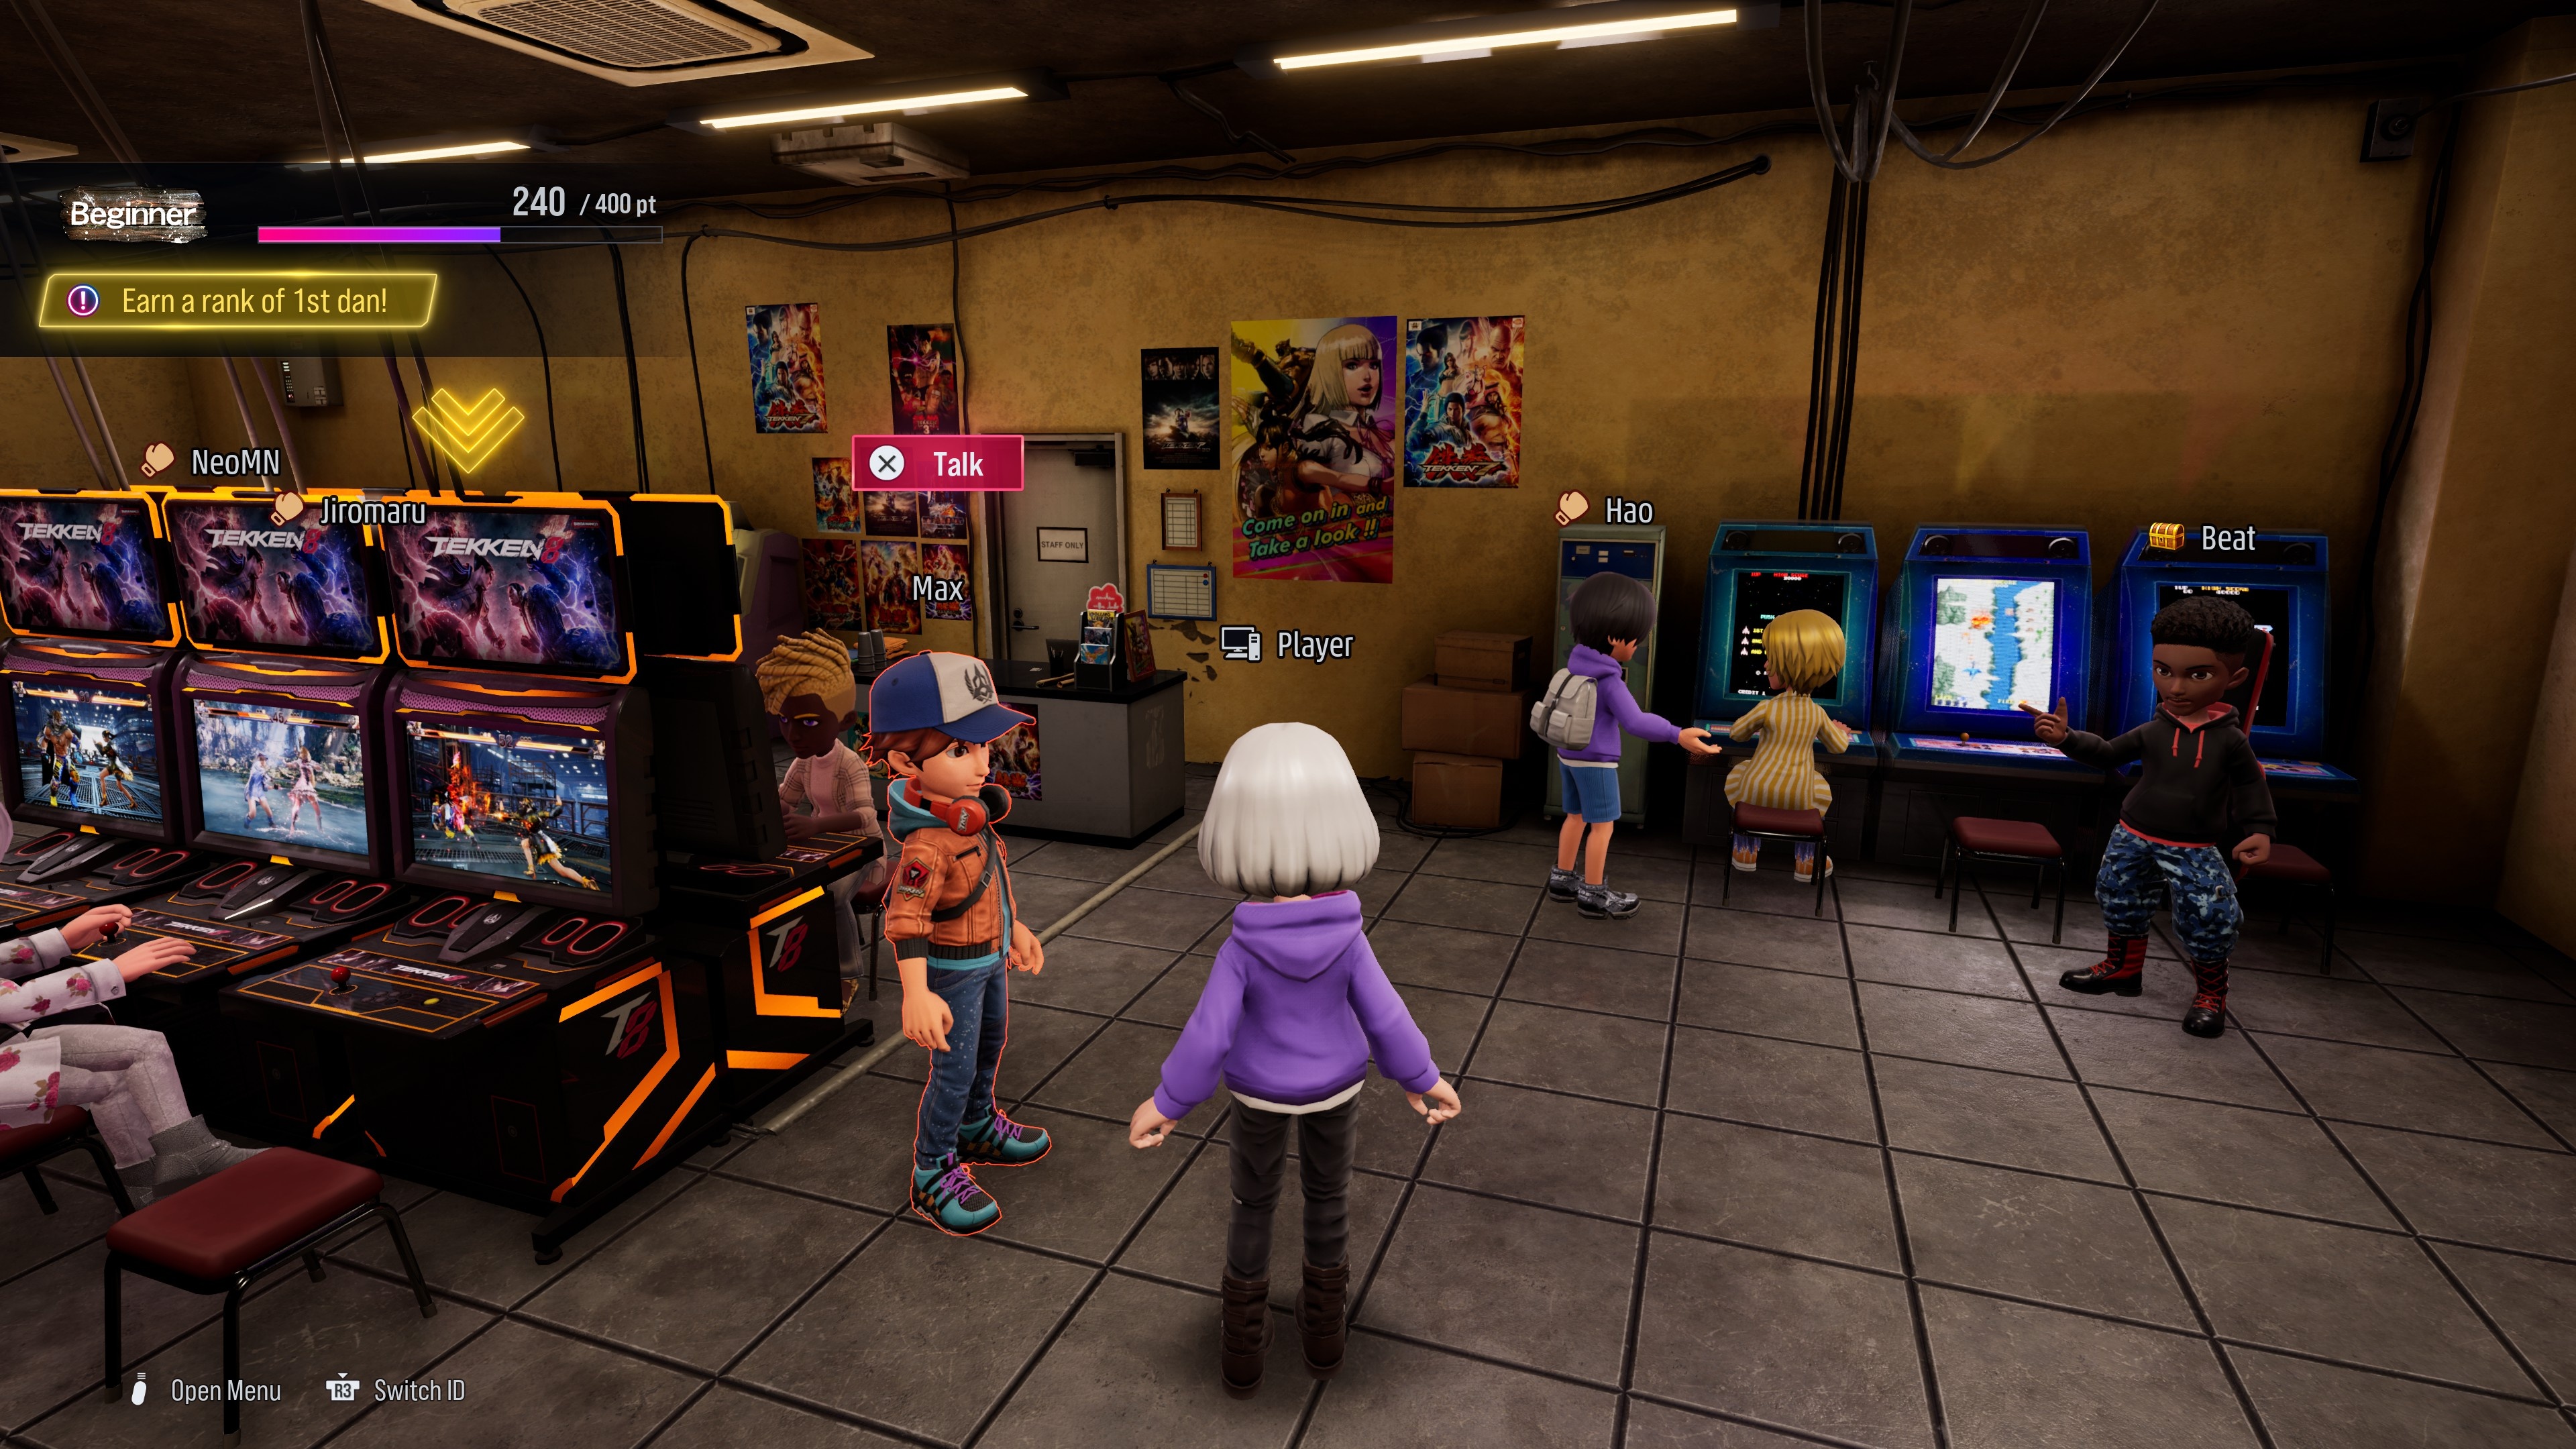 （Arcade Quest 是一种全新的游戏模式，在该模式中，您可以创建一个头像，并与它一起在独立于主游戏的虚拟街机中冒险）